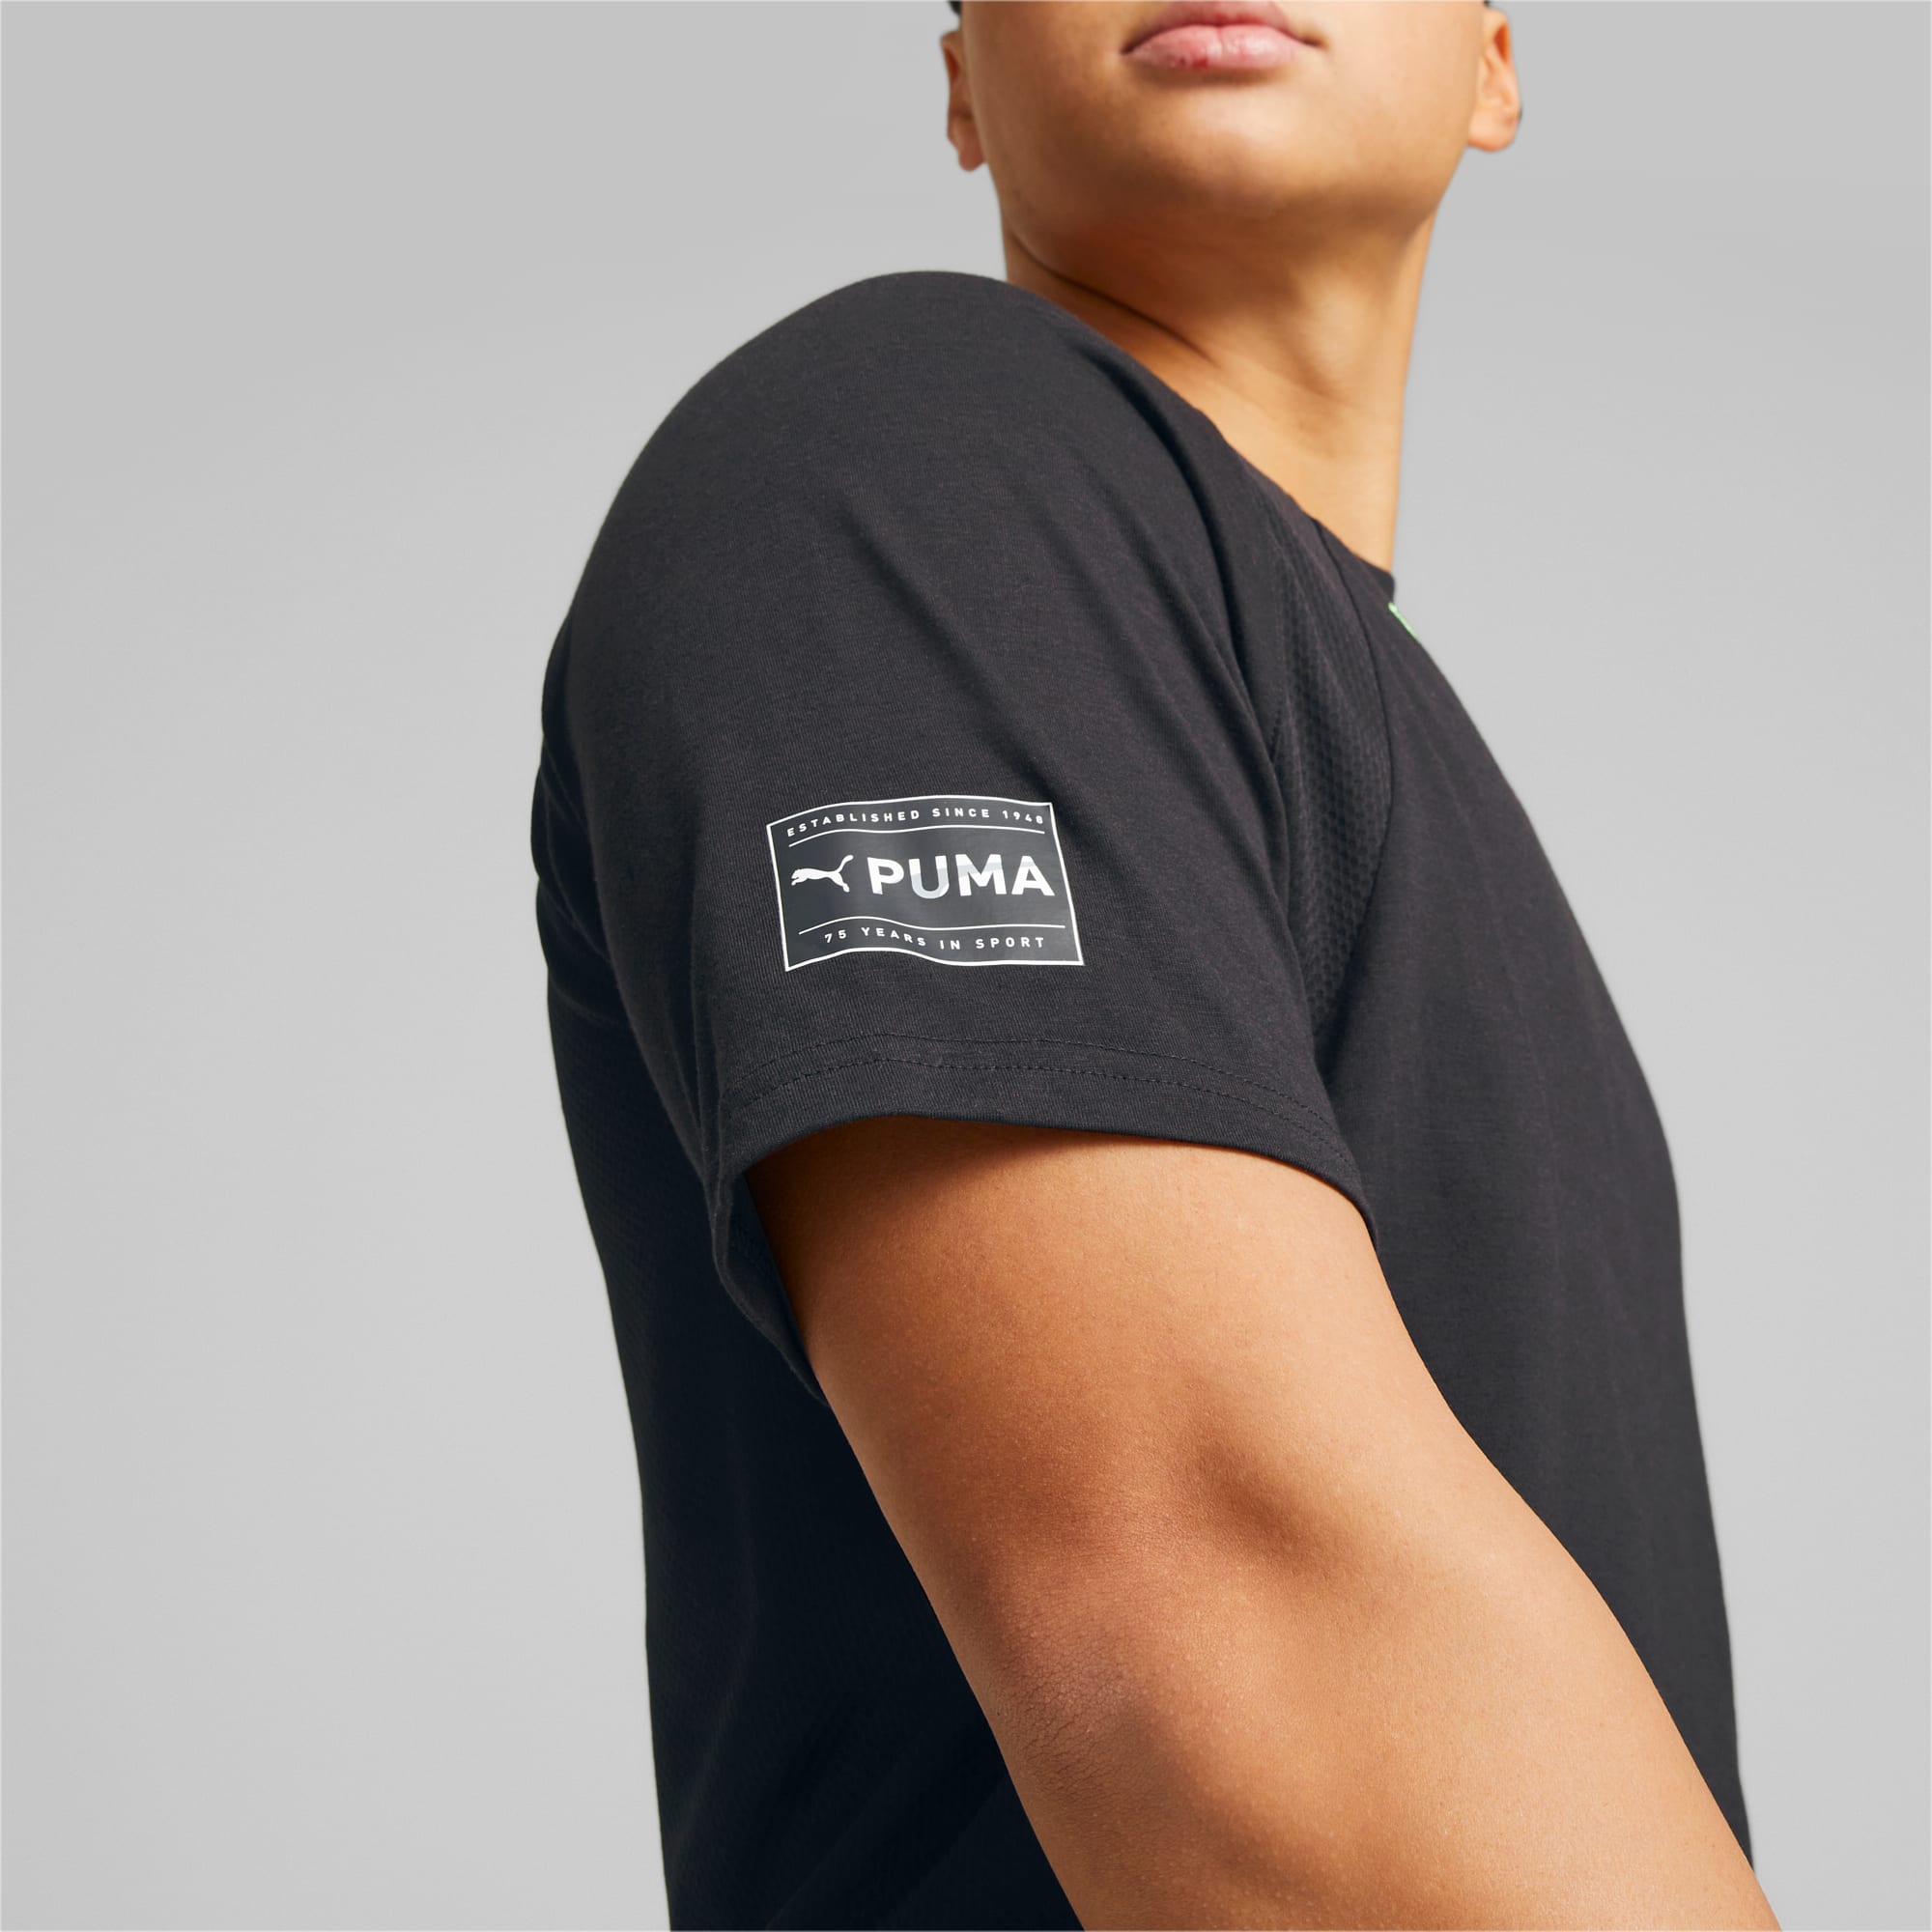 PUMA Ultrabreathe PUMA Puma Fit | Tee Black-Fizzy Lime PUMA Shop | PUMA Triblend All Training | Men